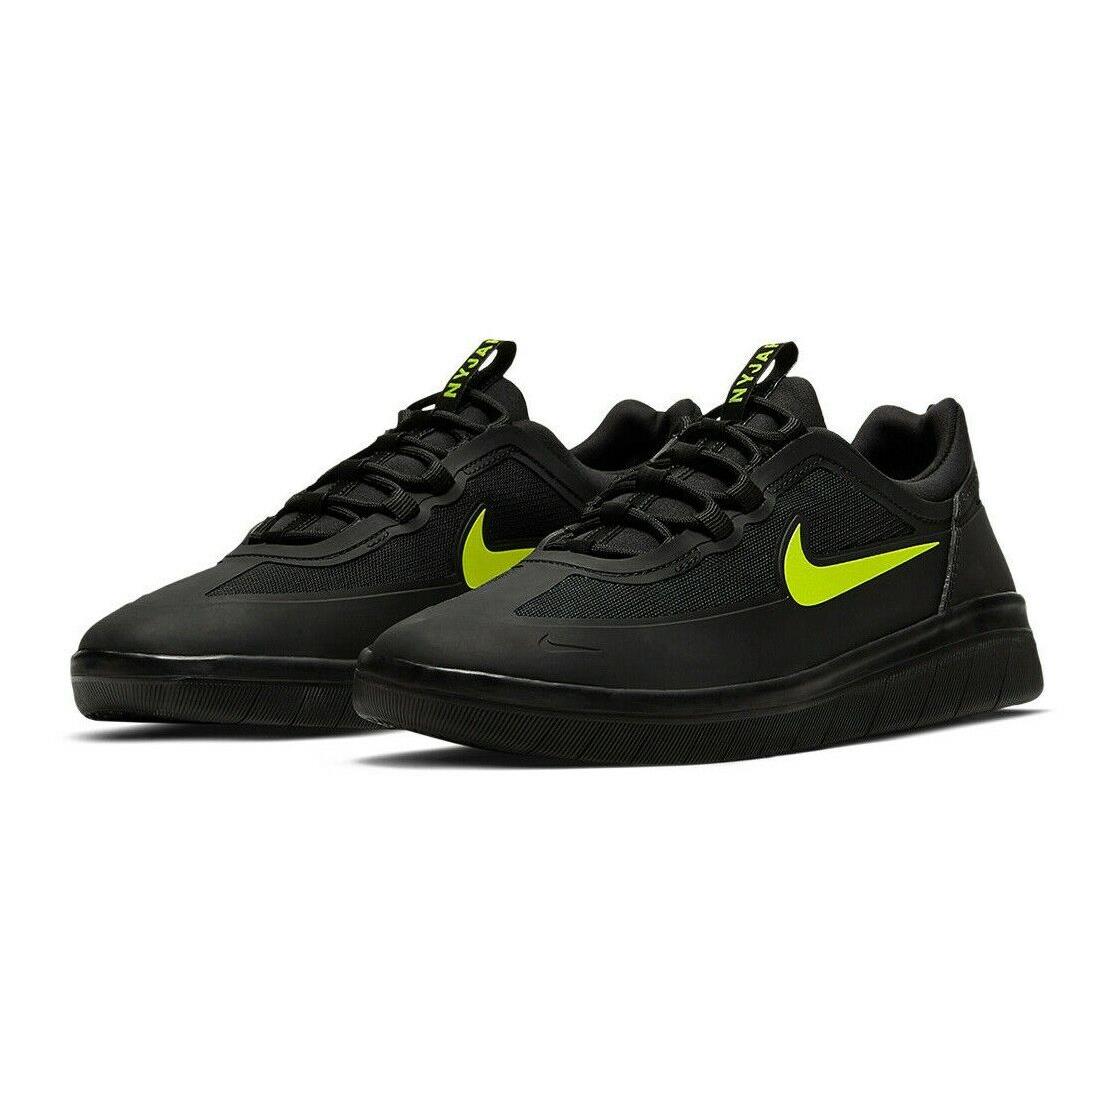 Nike SB Nyjah Free 2 Mens Size 6.5 Sneaker Shoes BV2078 005 Black Cyber Yellow